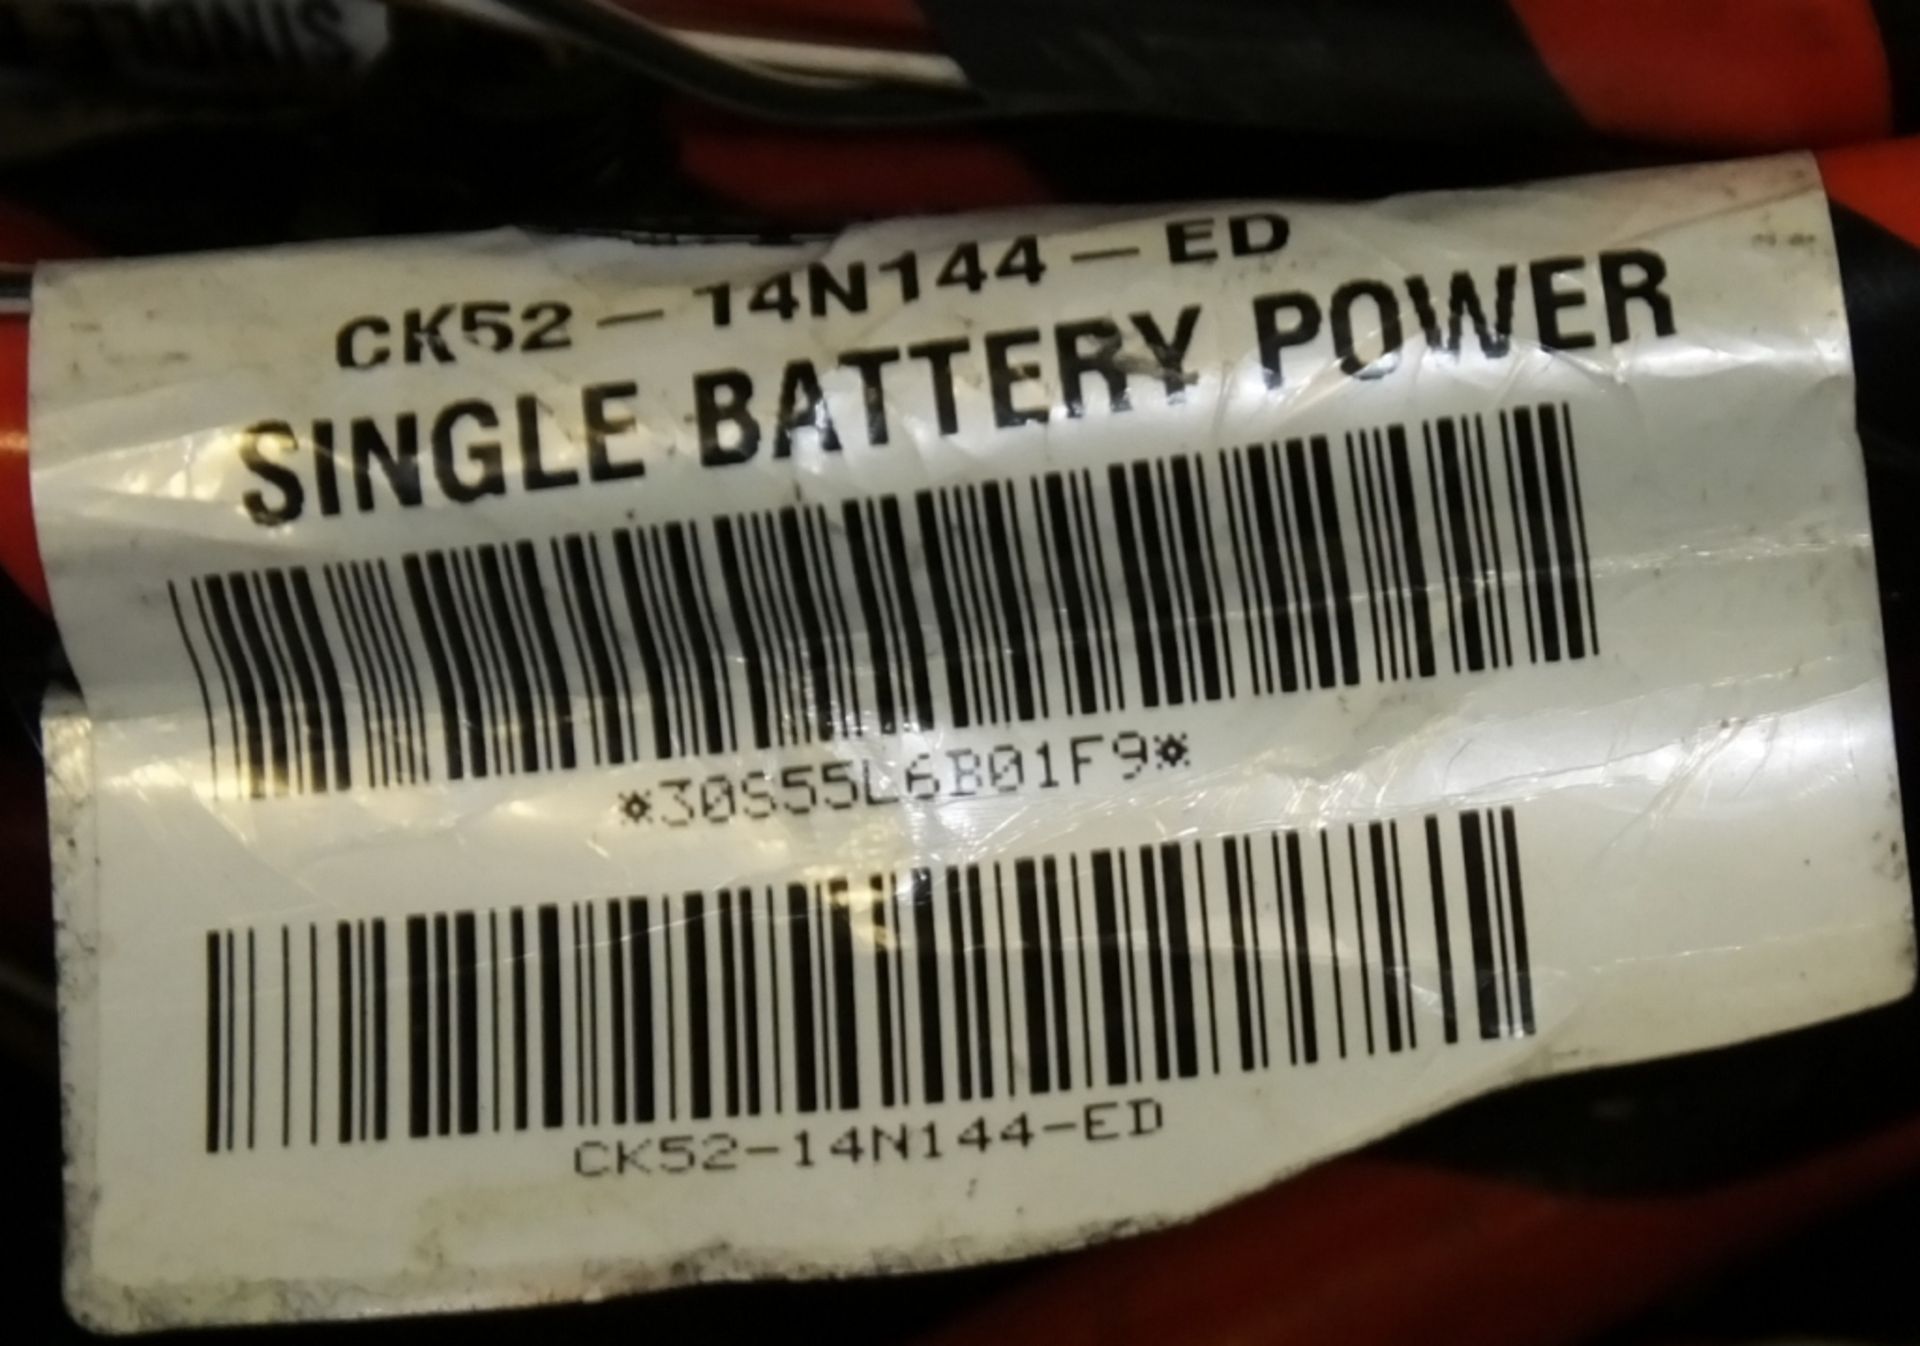 25x Jaguar / Land Rover Battery Cables - CK-52-14N144 - Image 3 of 5